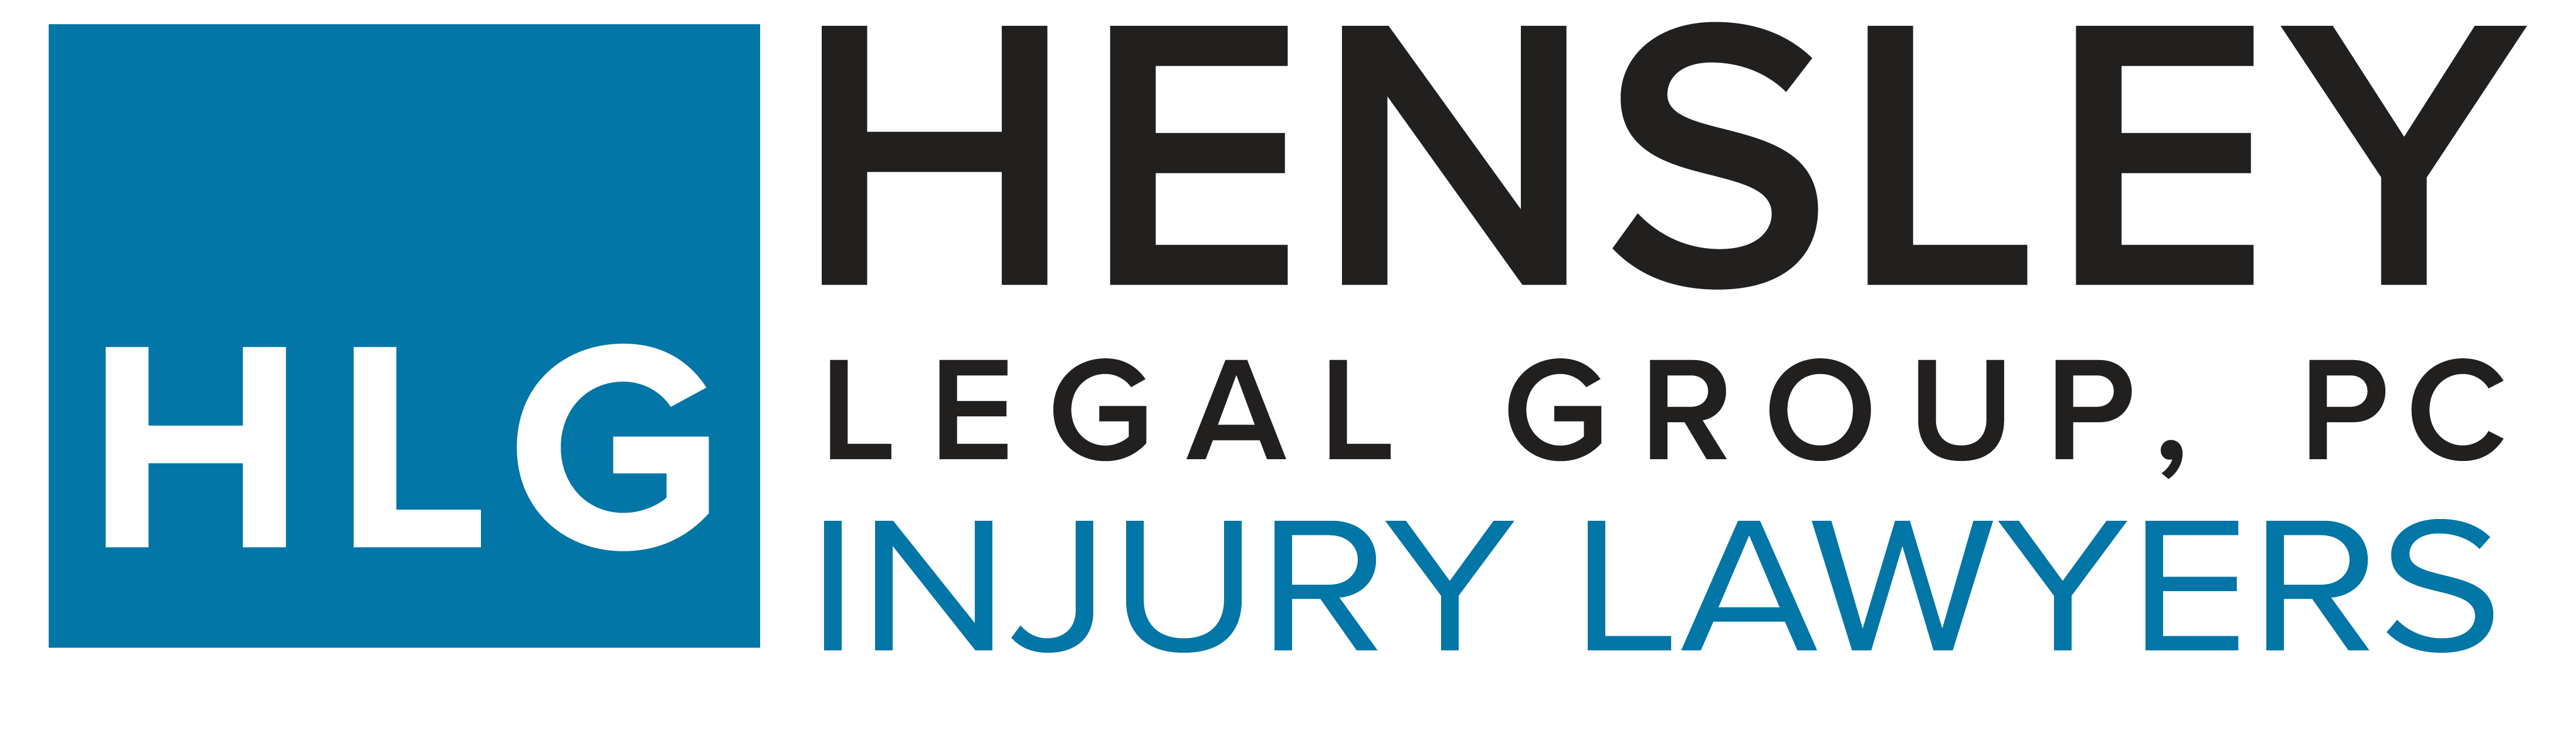 Hensley Legal Group, PC Company Logo